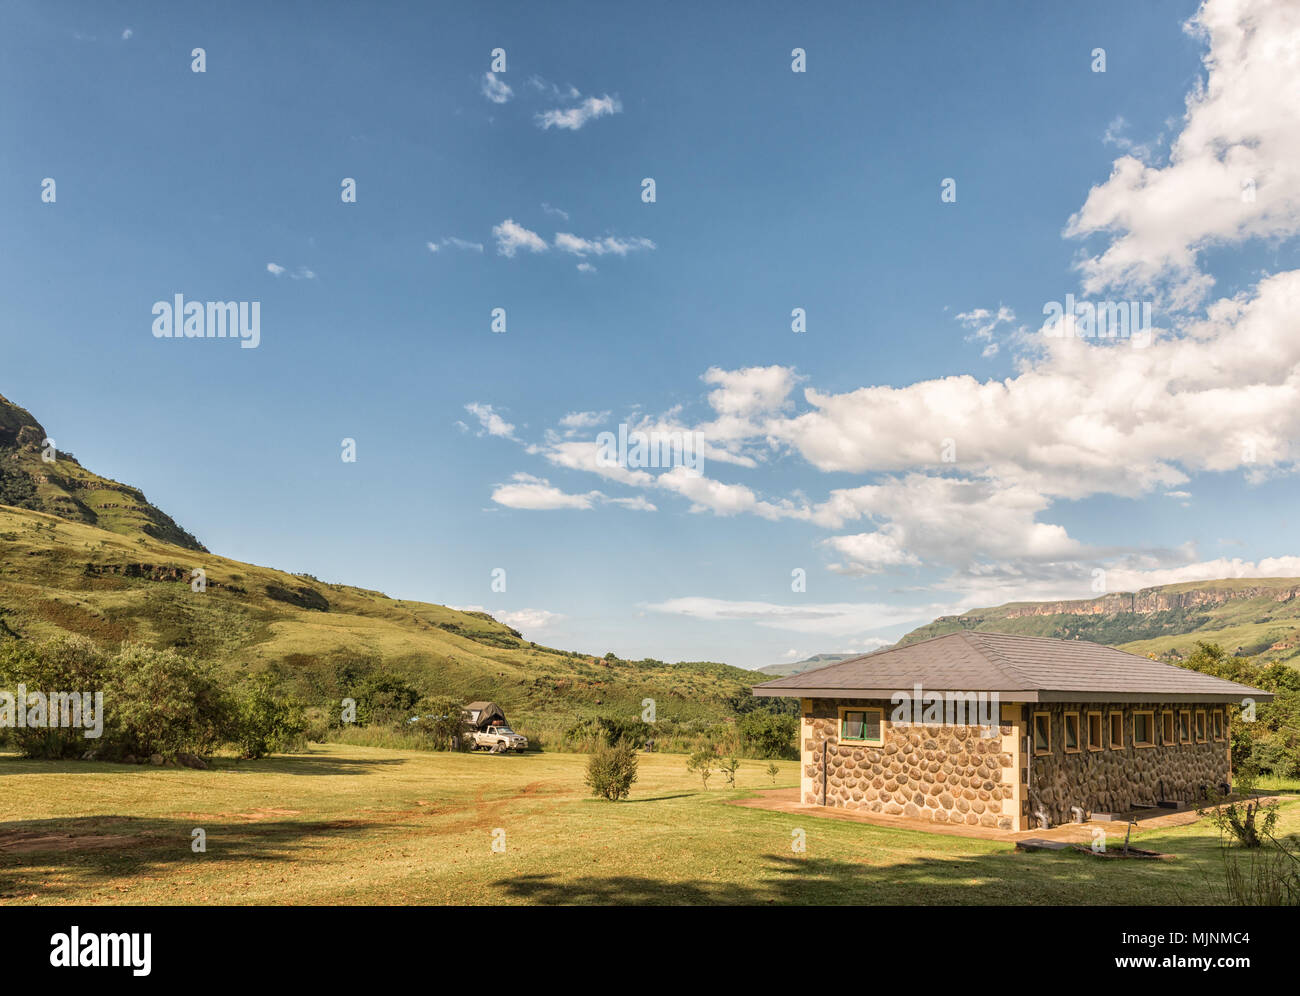 INJISUTHI, SÜDAFRIKA - 19. MÄRZ 2018: Der Campingplatz mit Waschung Gebäude in Injisuthi im Maloti Drakensberg Park Stockfoto